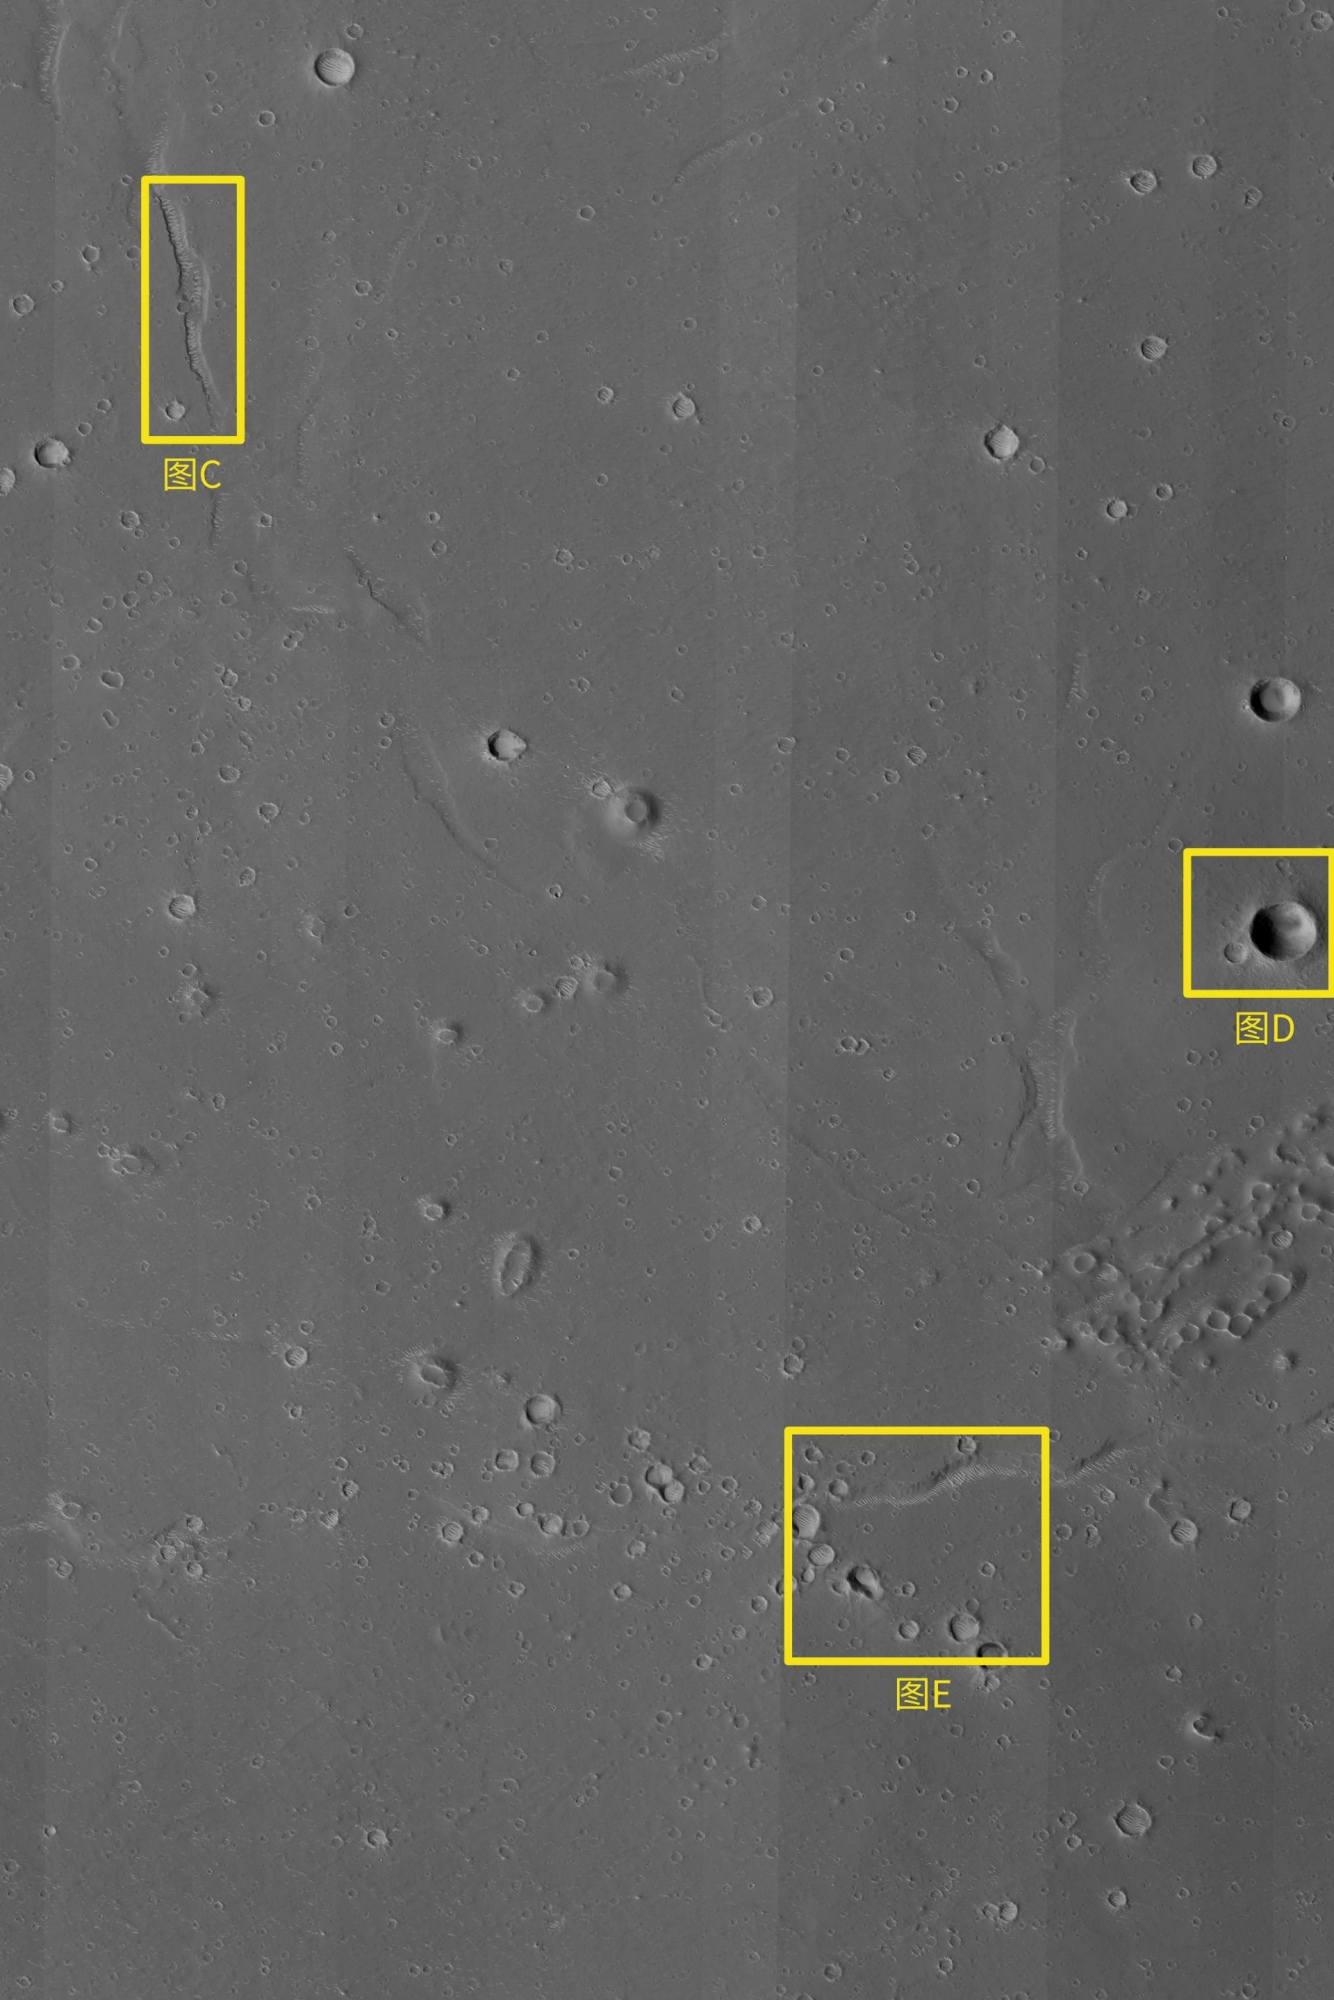 12_Tianwen-1-orbiter_HiRIC_Utopia-Planitia_landing-site-S_detail-boxes.thumb.jpg.d796cf3455b76501abb5b60ac00c6248.jpg